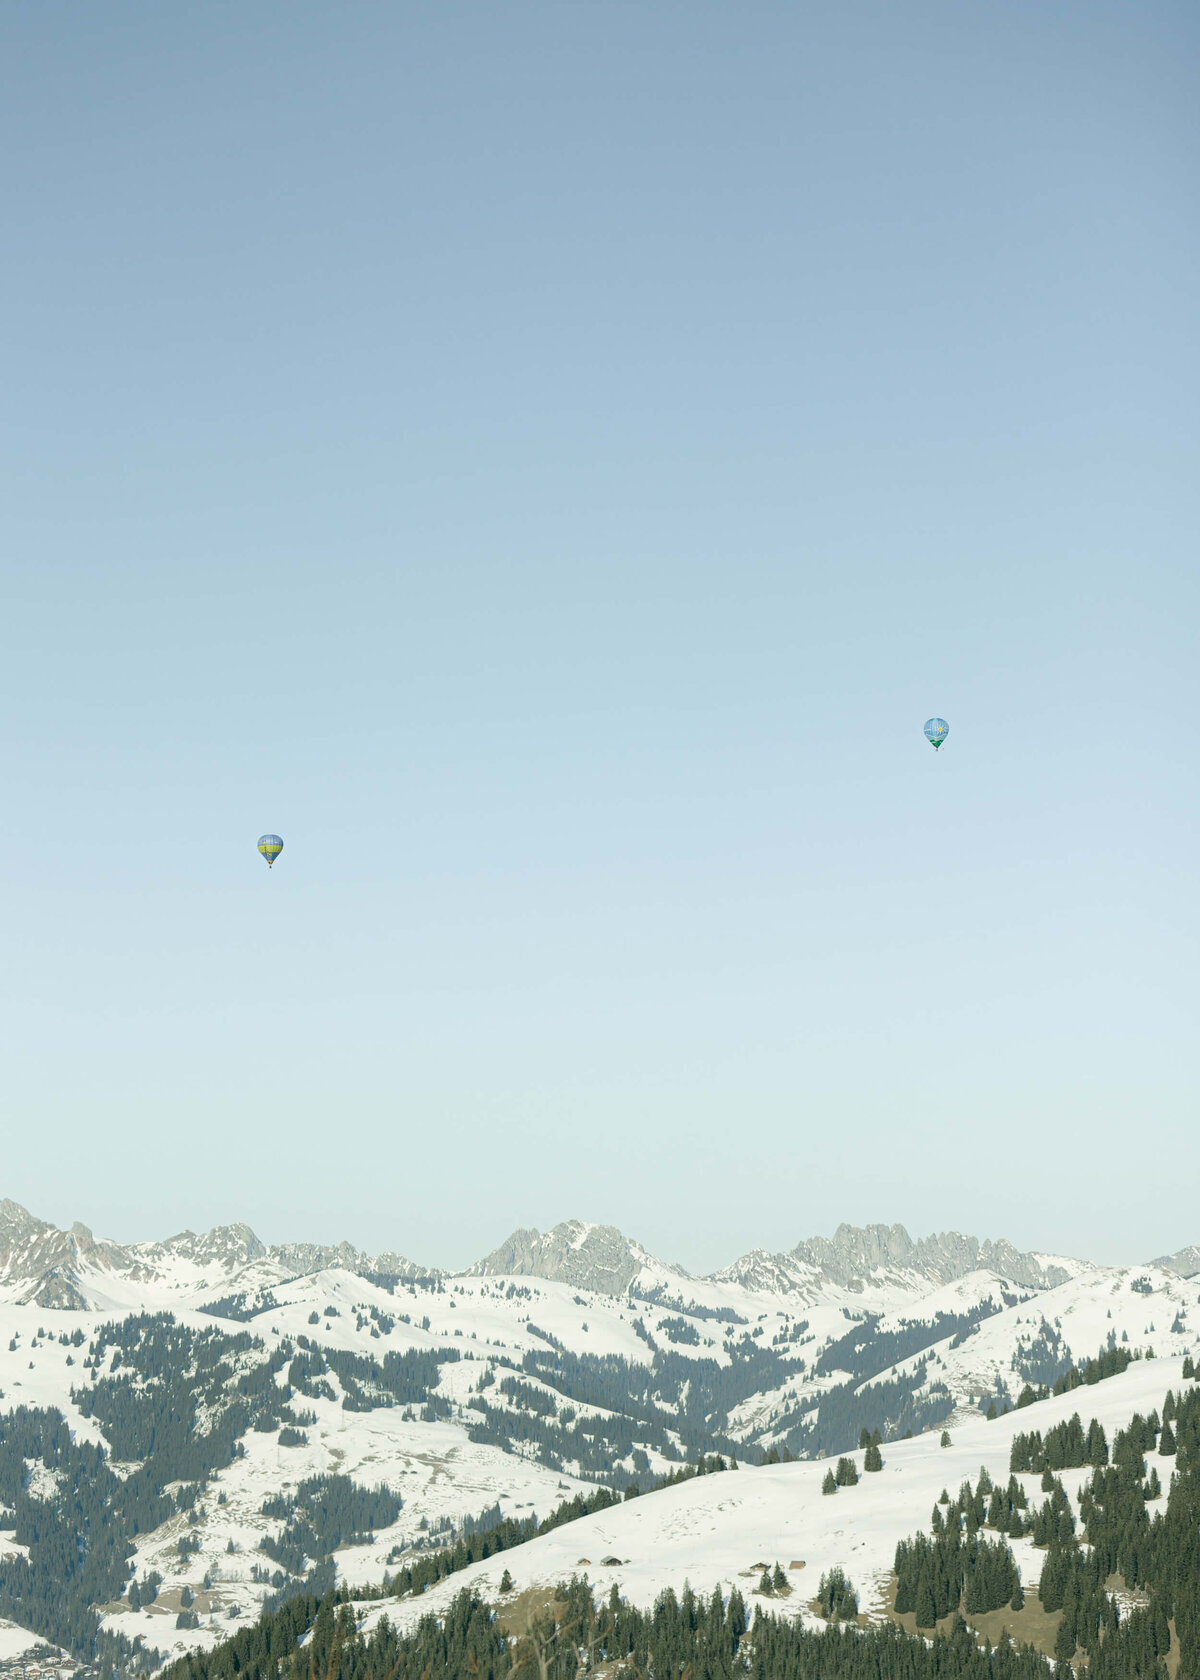 chloe-winstanley-events-gstaad-mountain-hot-air-ballon